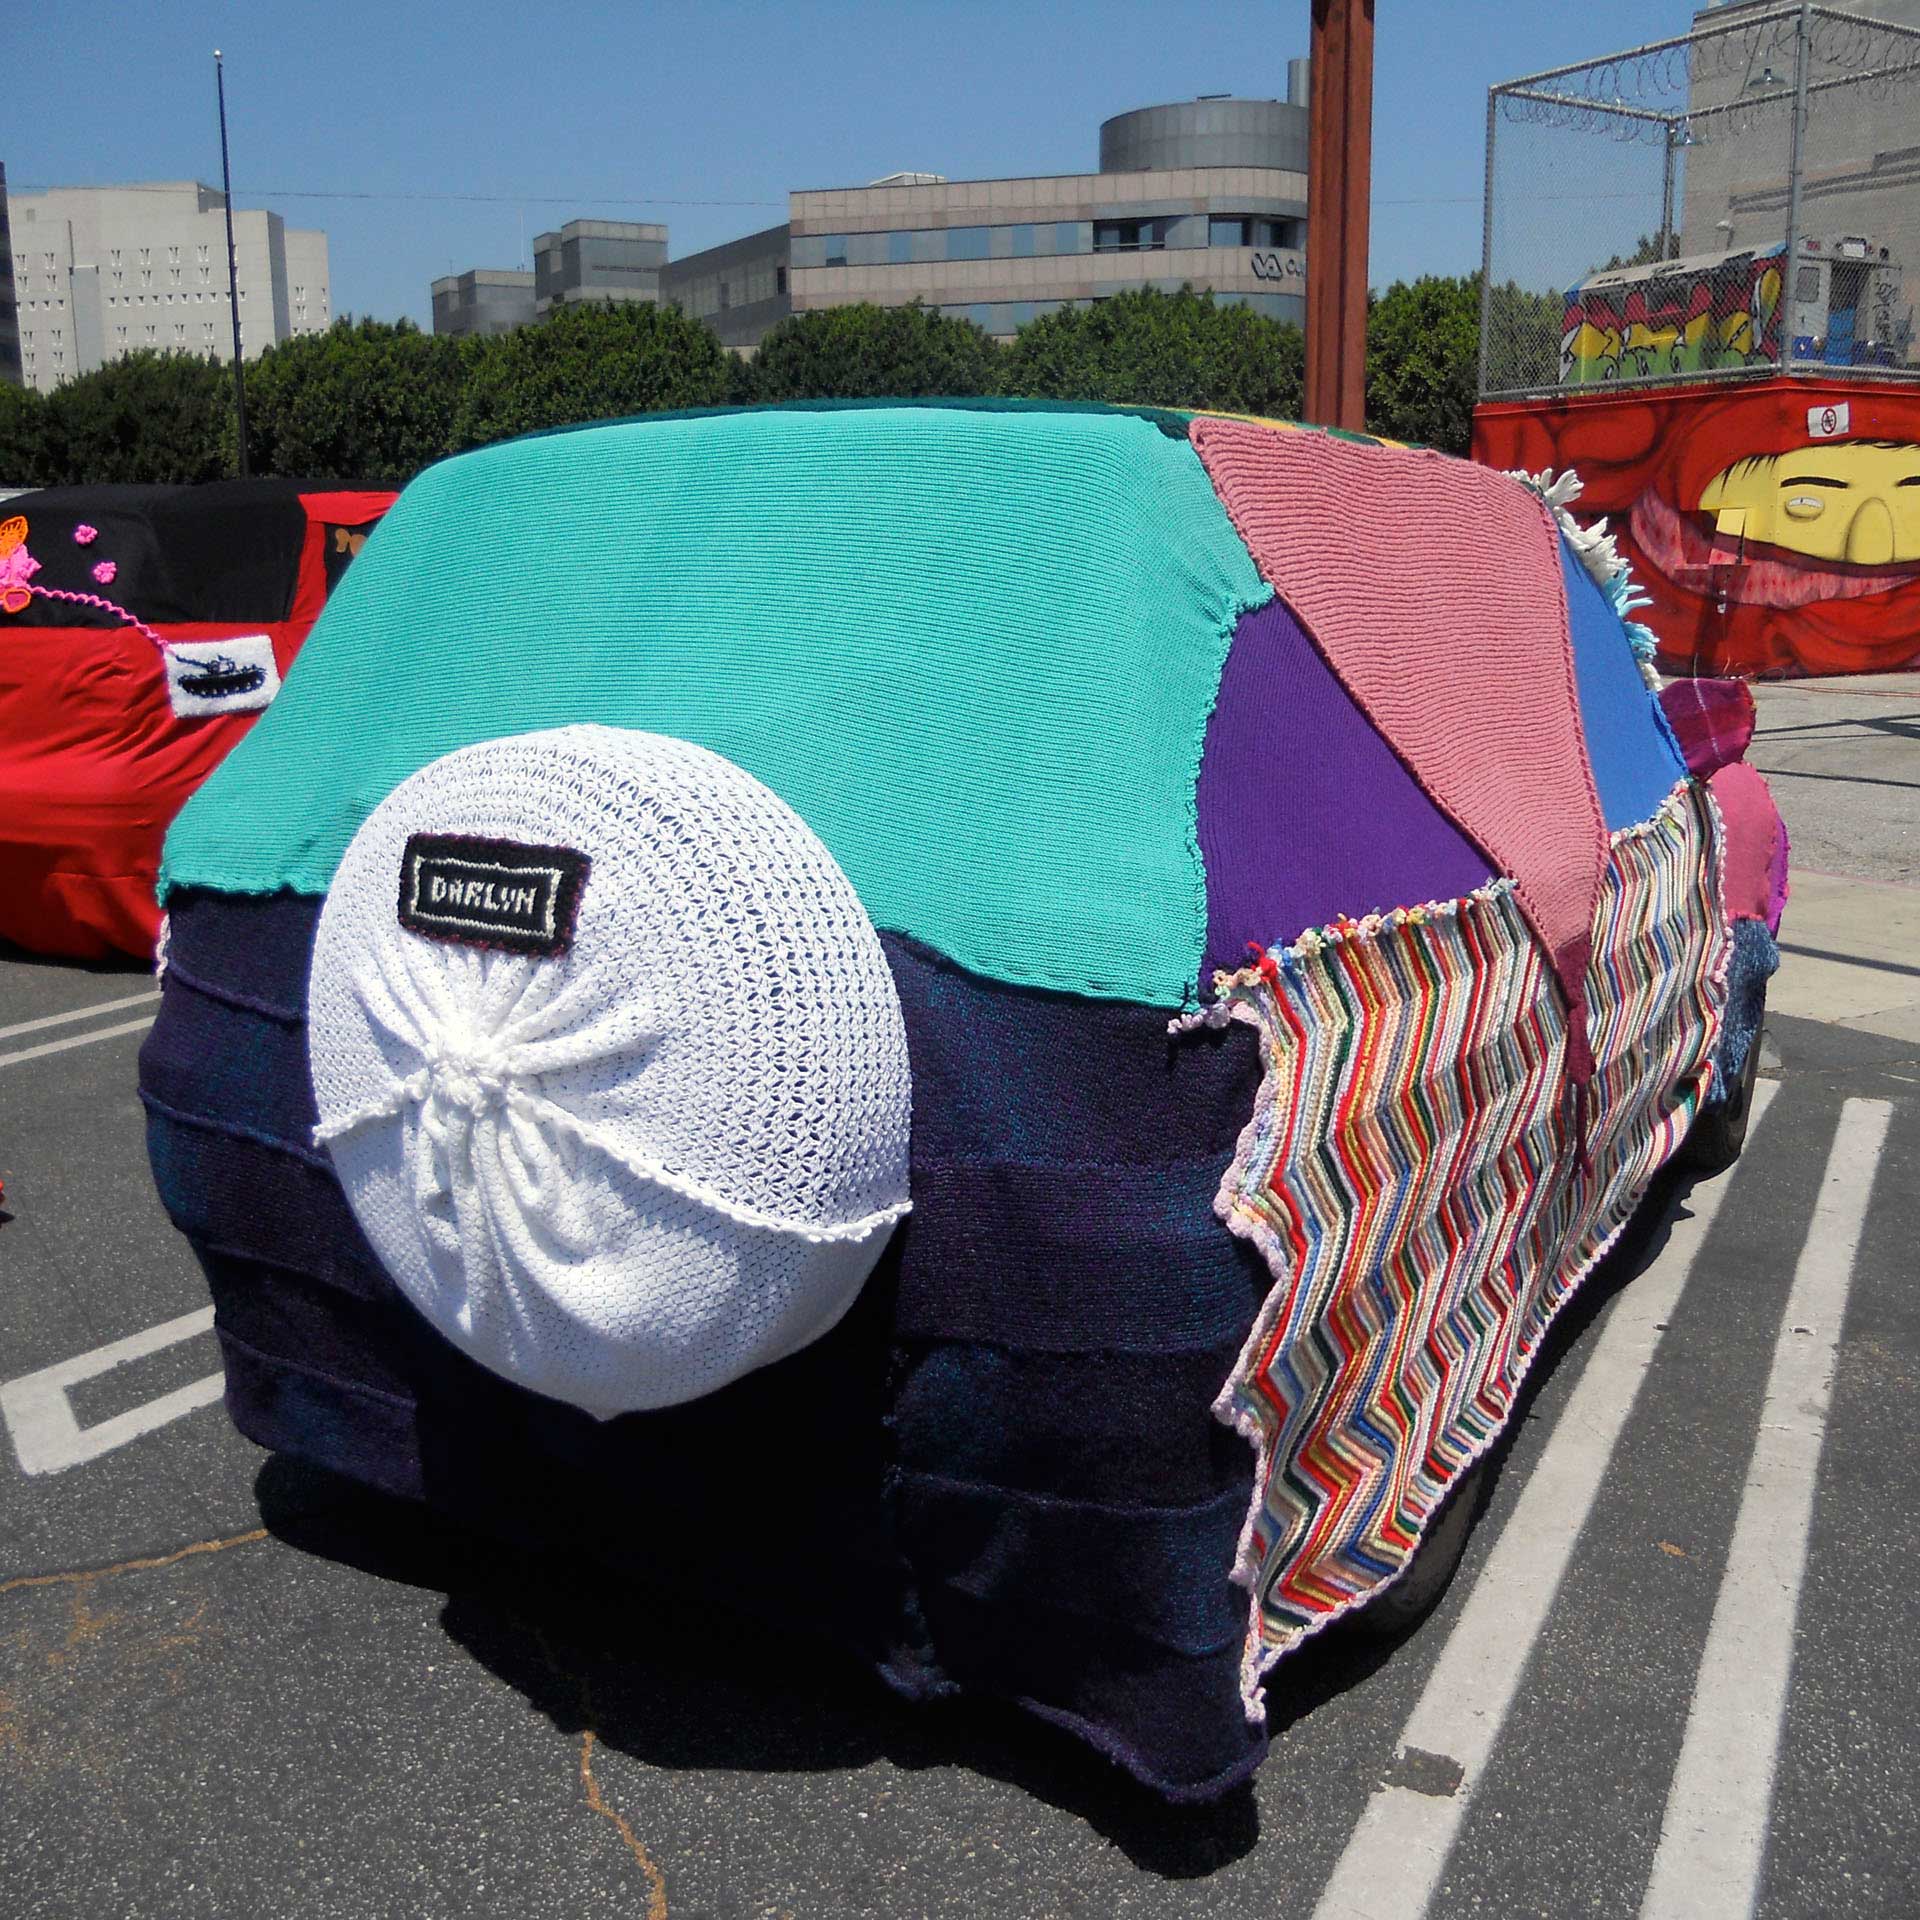 Car Cozy by Darlyn Susan Yee